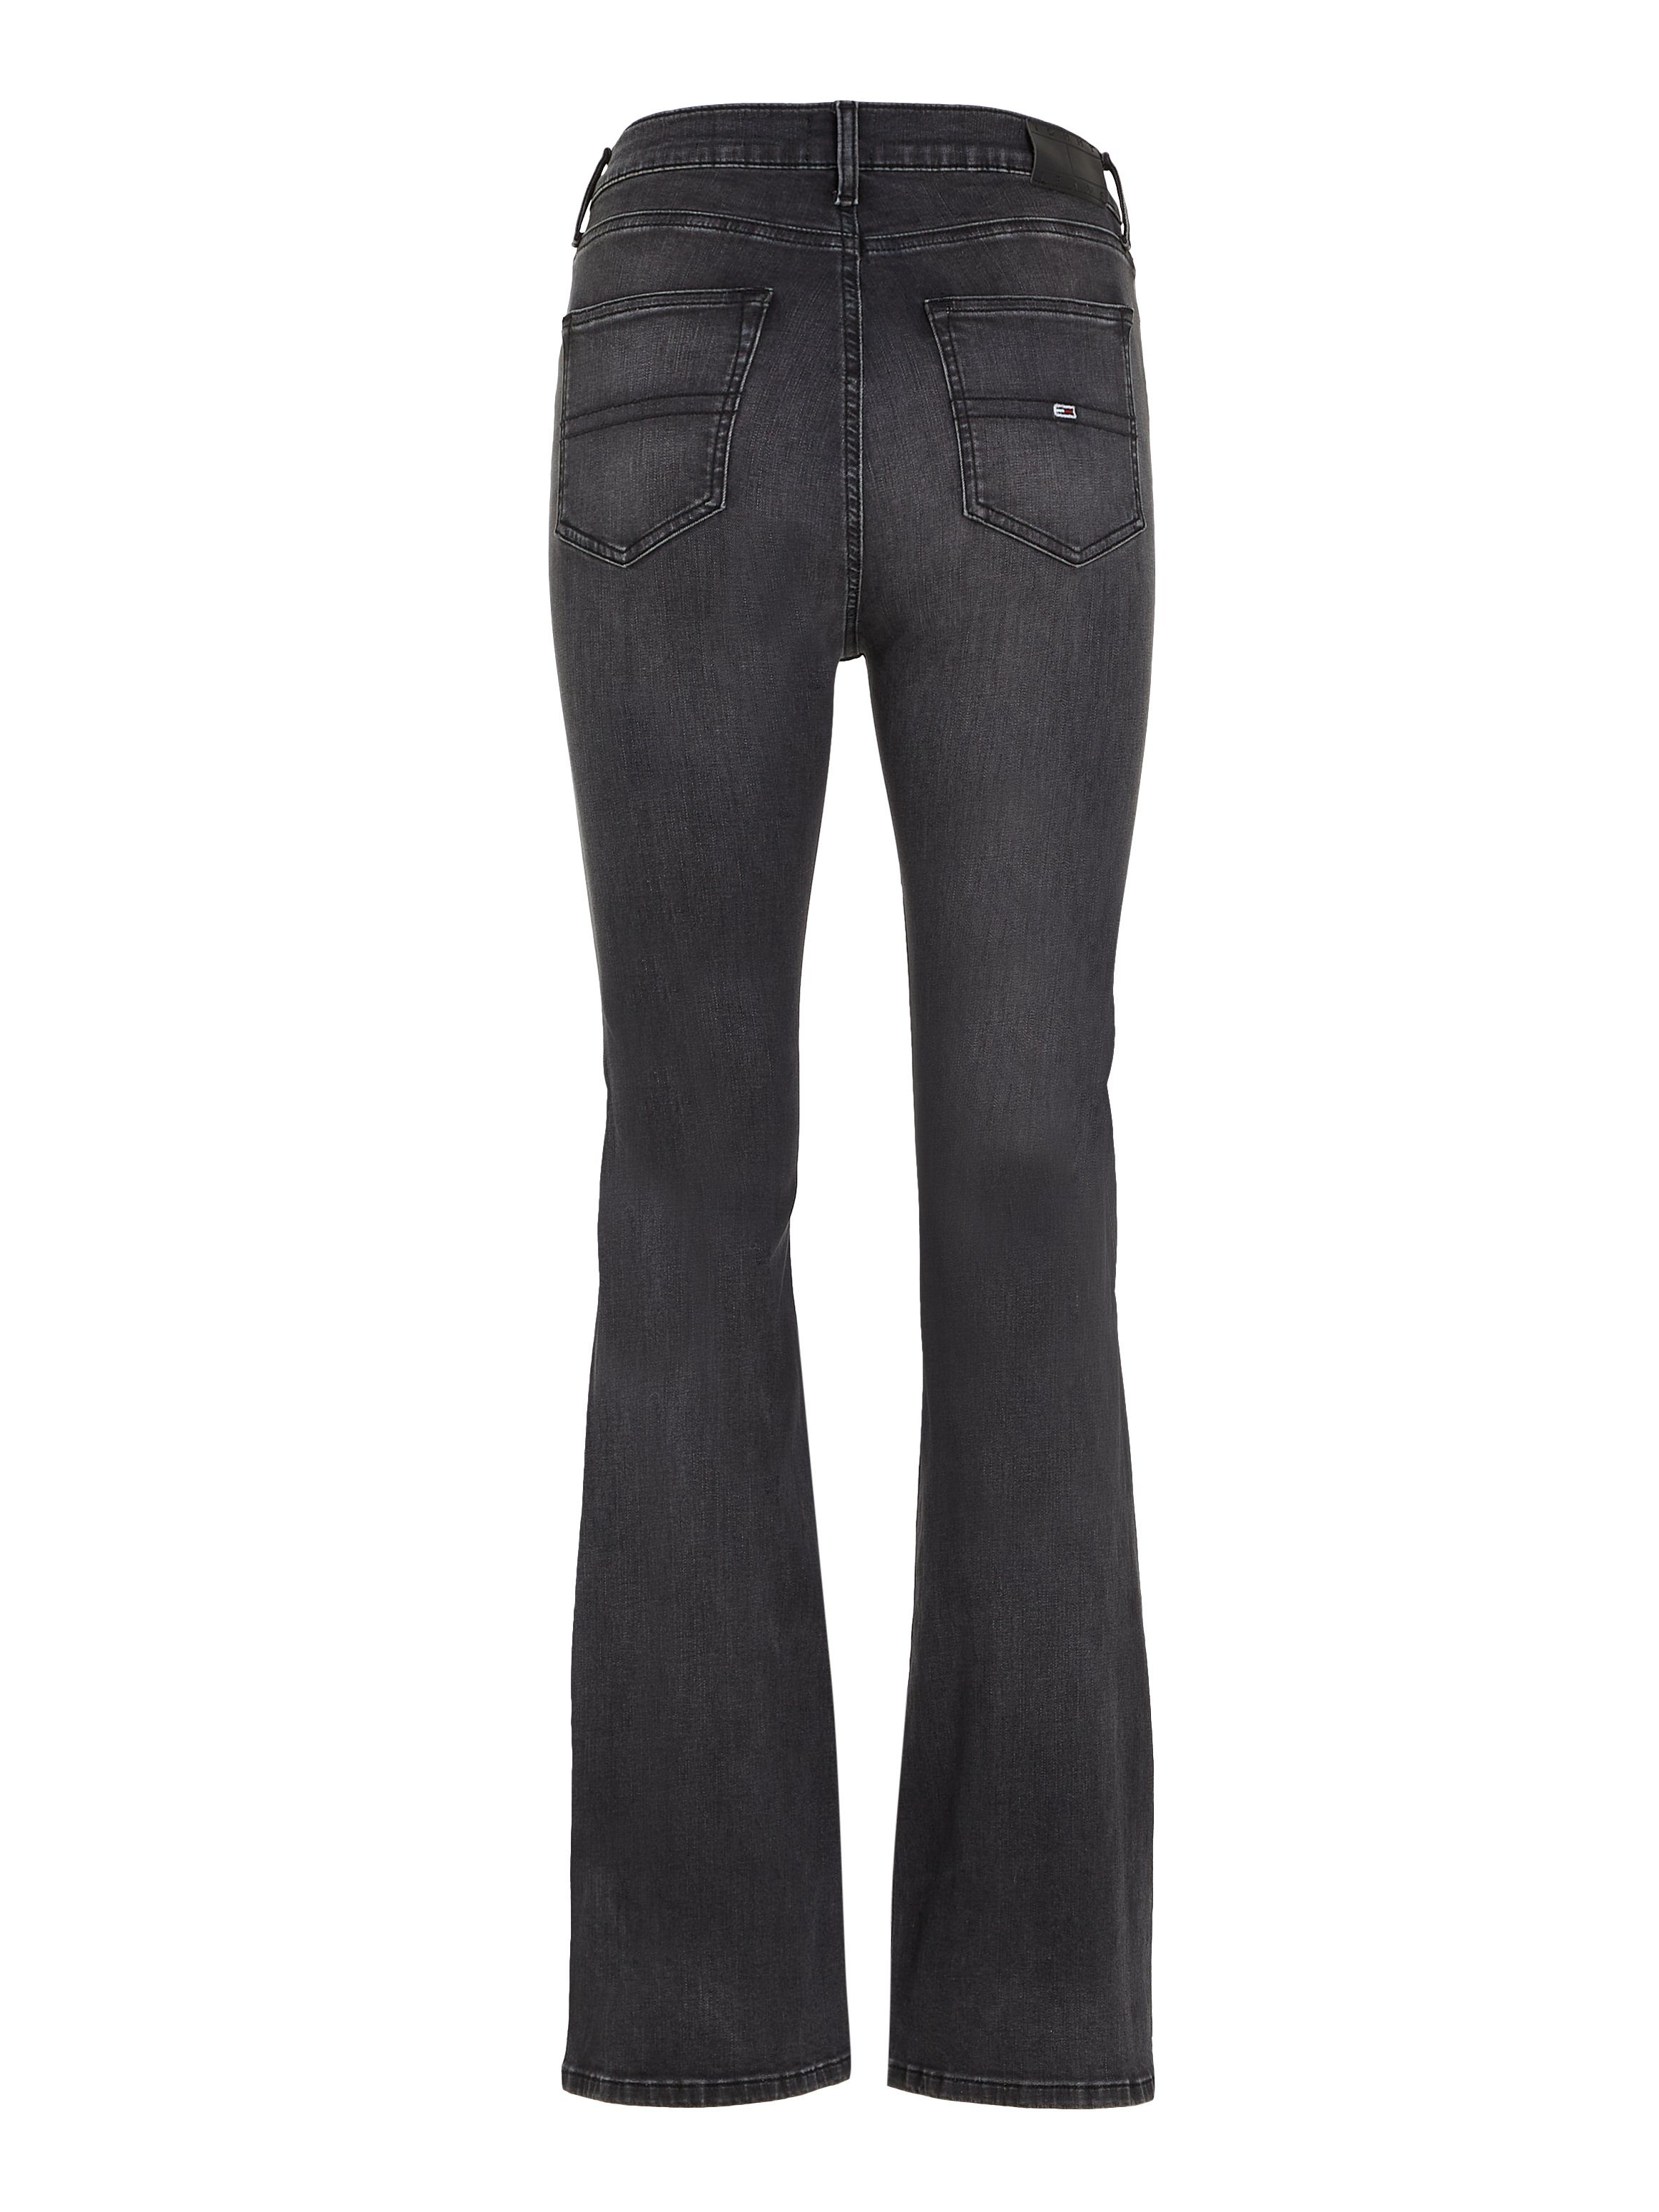 Markenlabel Jeans Sylvia Bequeme black30 Tommy mit Jeans